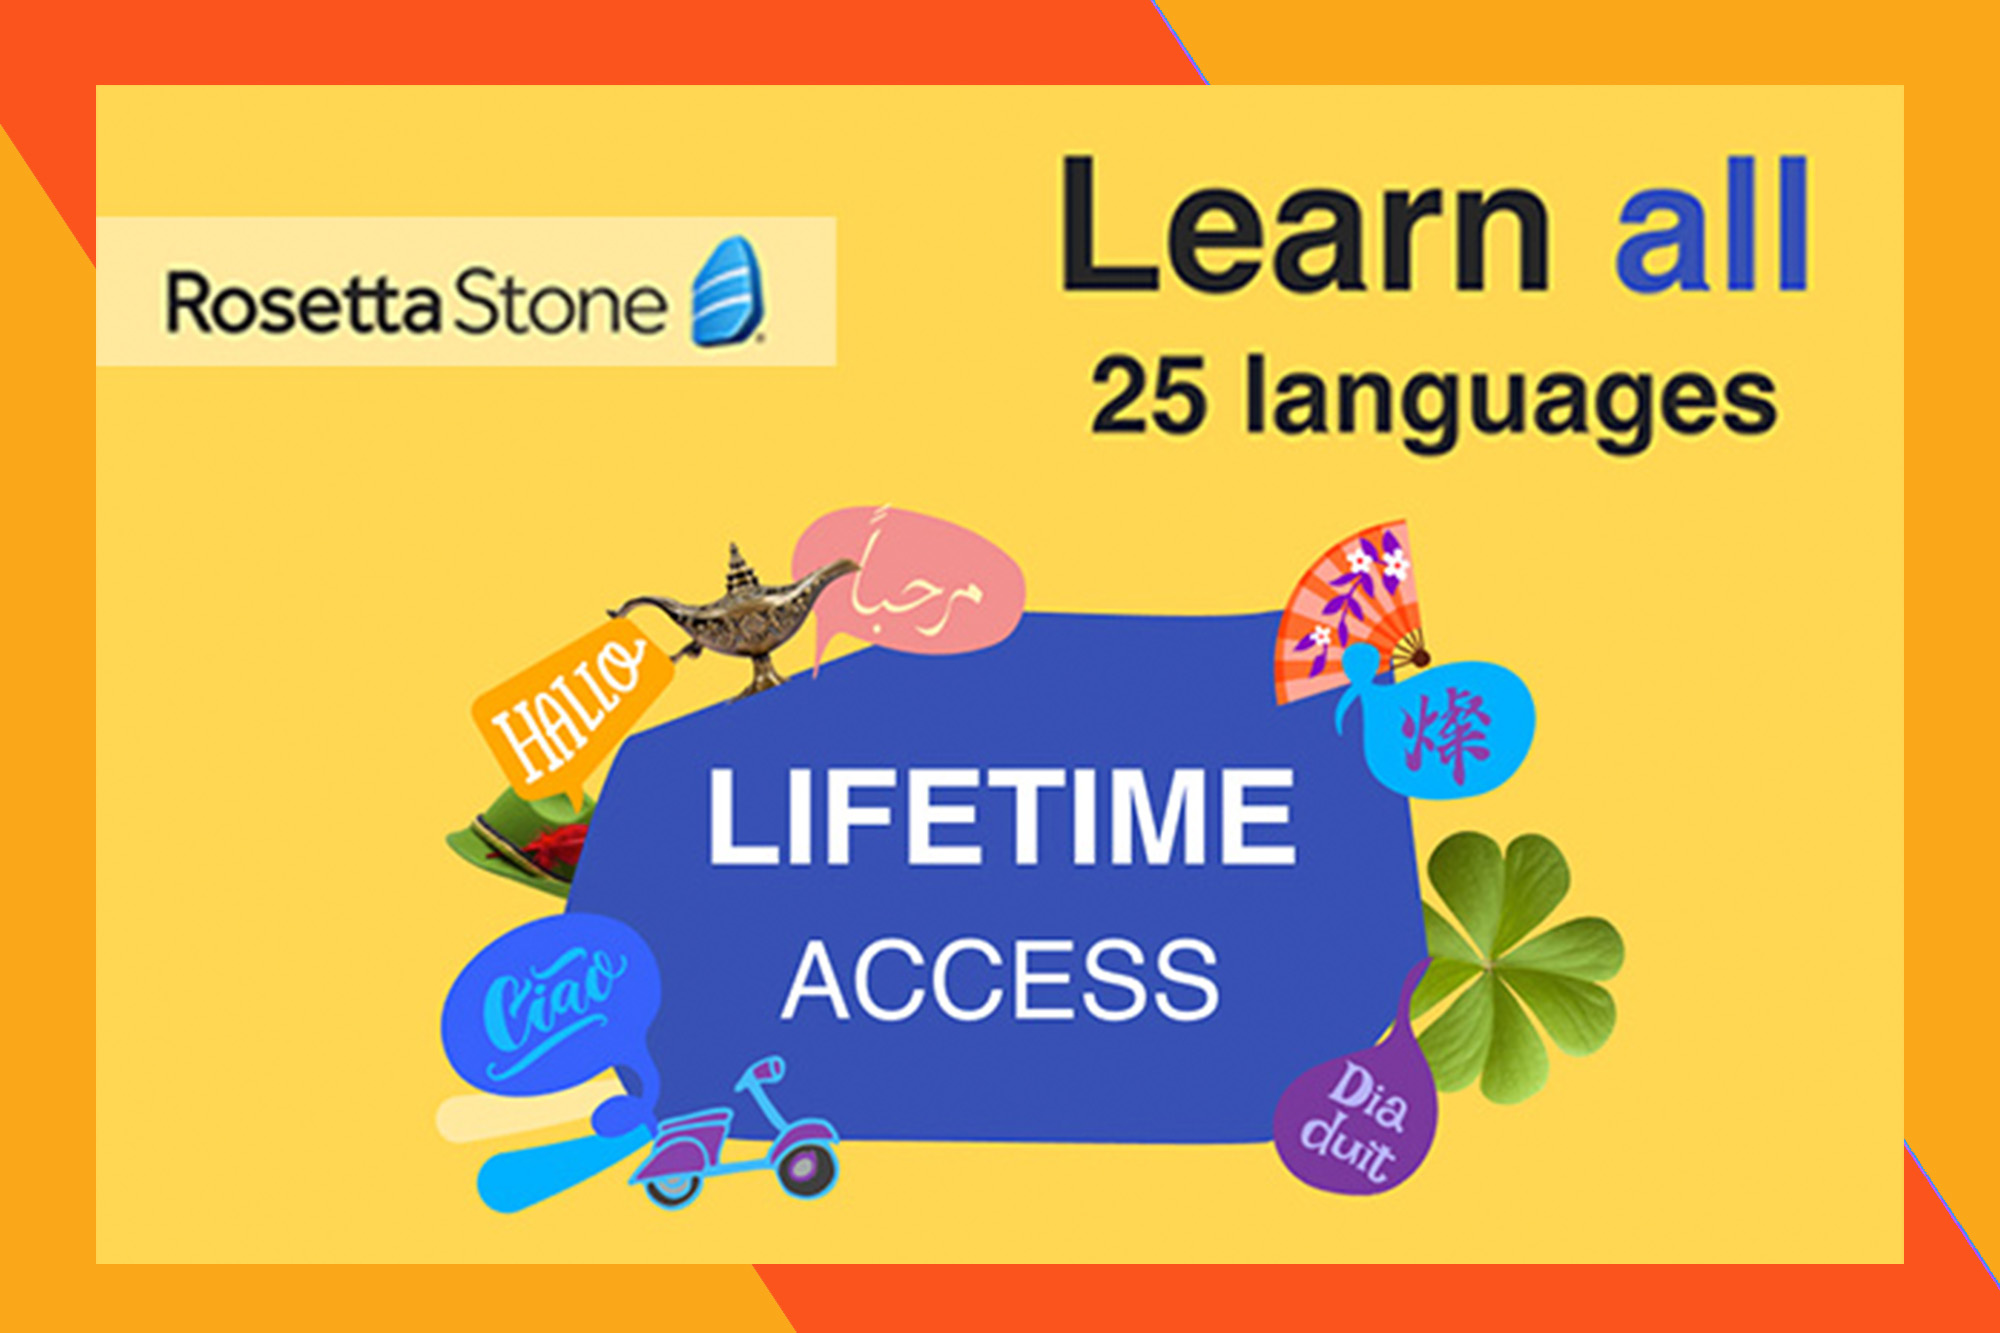 Rosetta Stone promo image